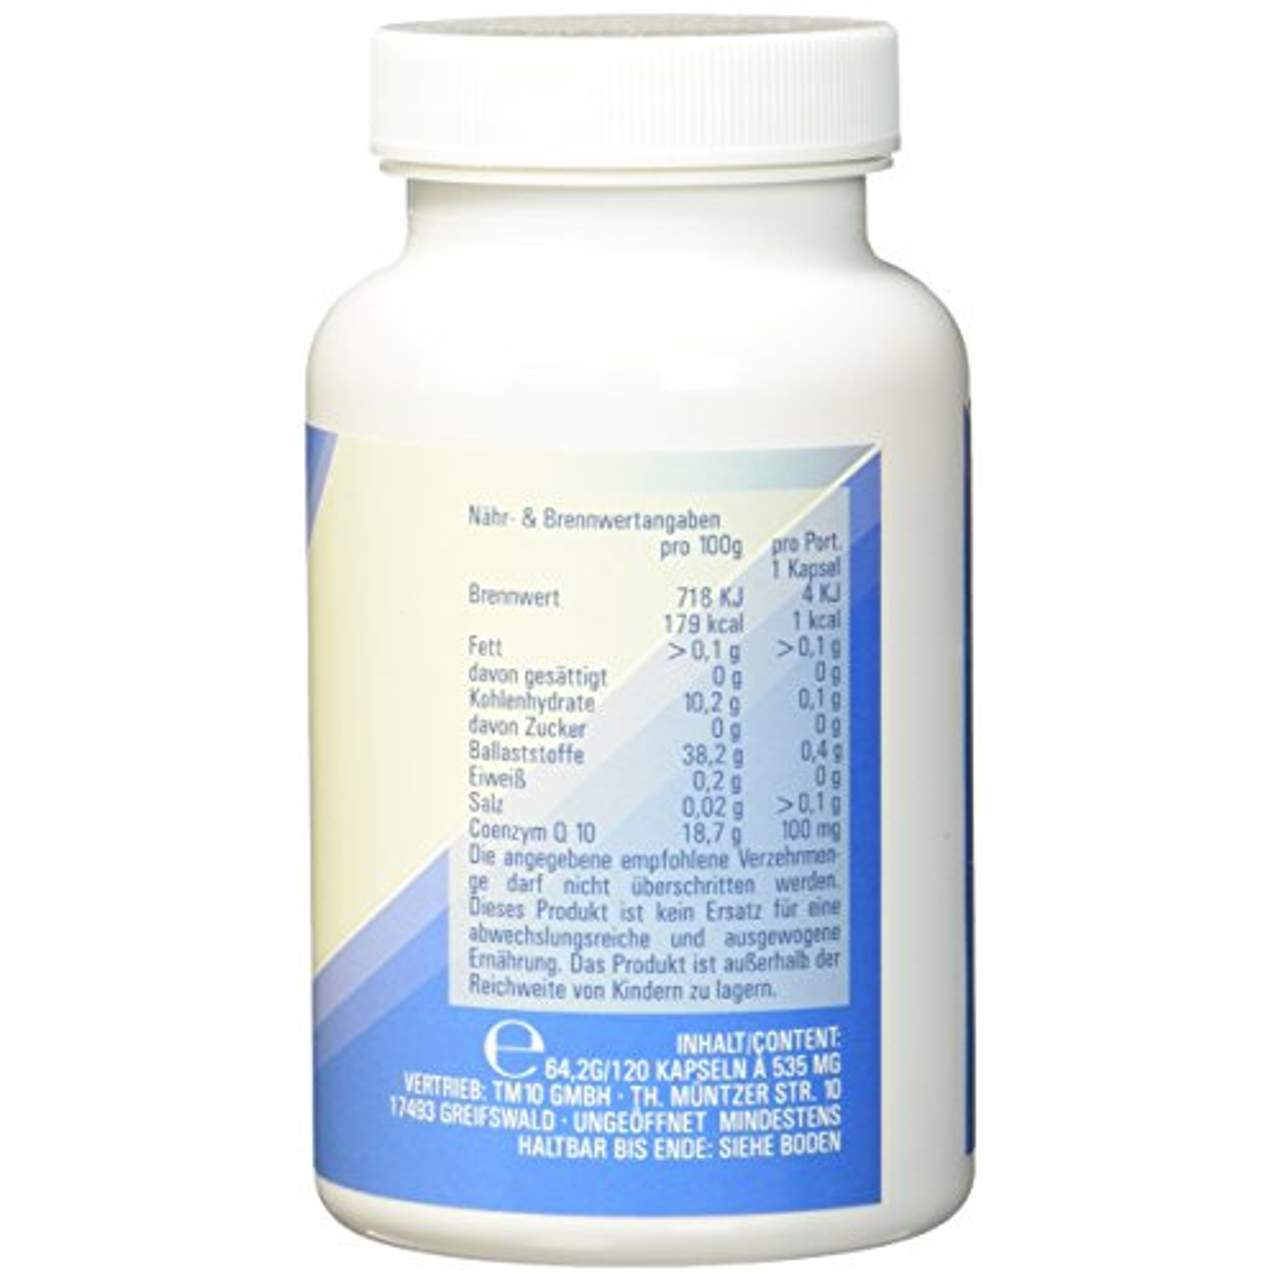 Vitasyg Coenzym Q10 120 Kapseln a 100 mg